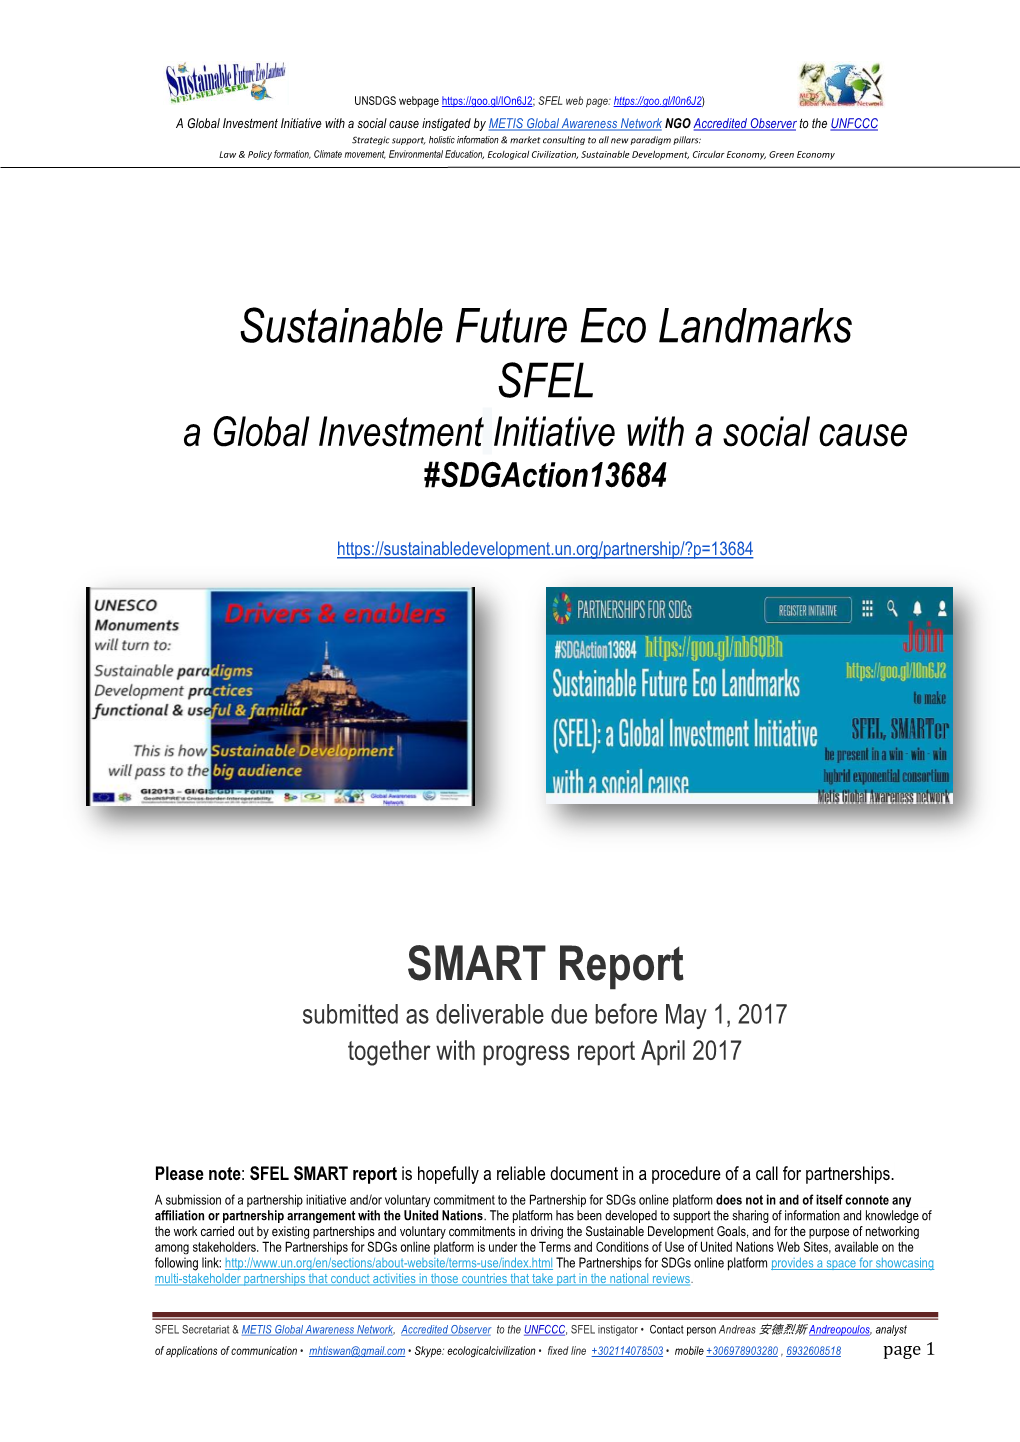 Sustainable Future Eco Landmarks SFEL SMART Report